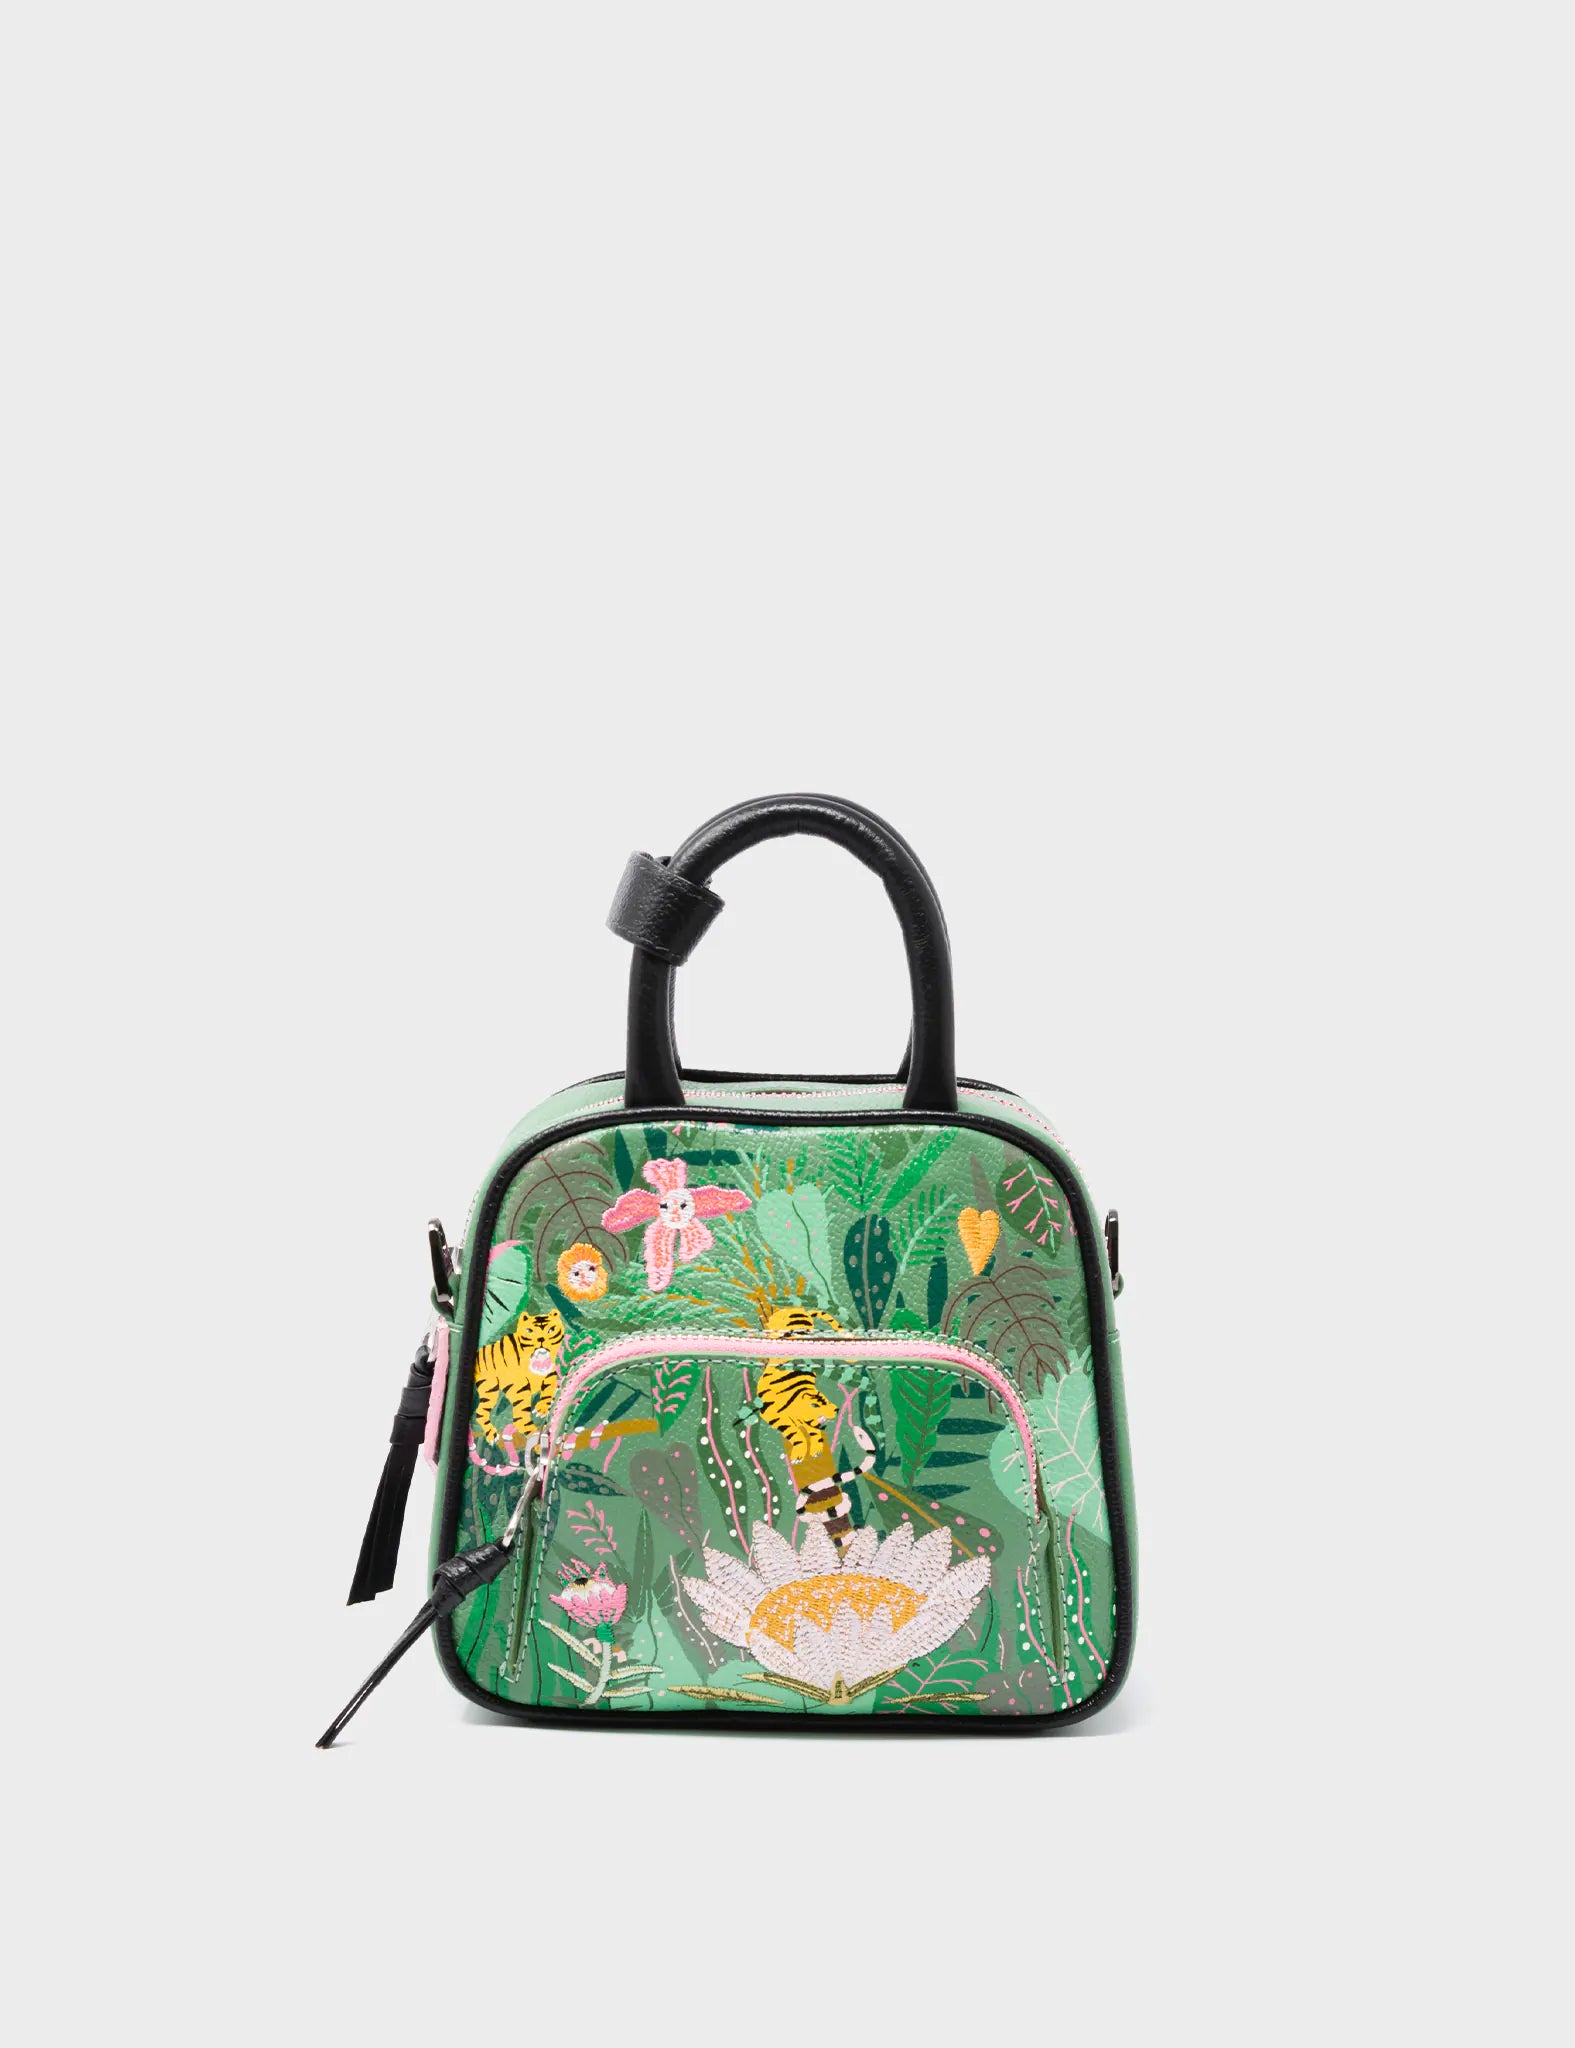 Marino Mini Crossbody Green Leather Bag - El Tropico Print & Embroidery Design - Front